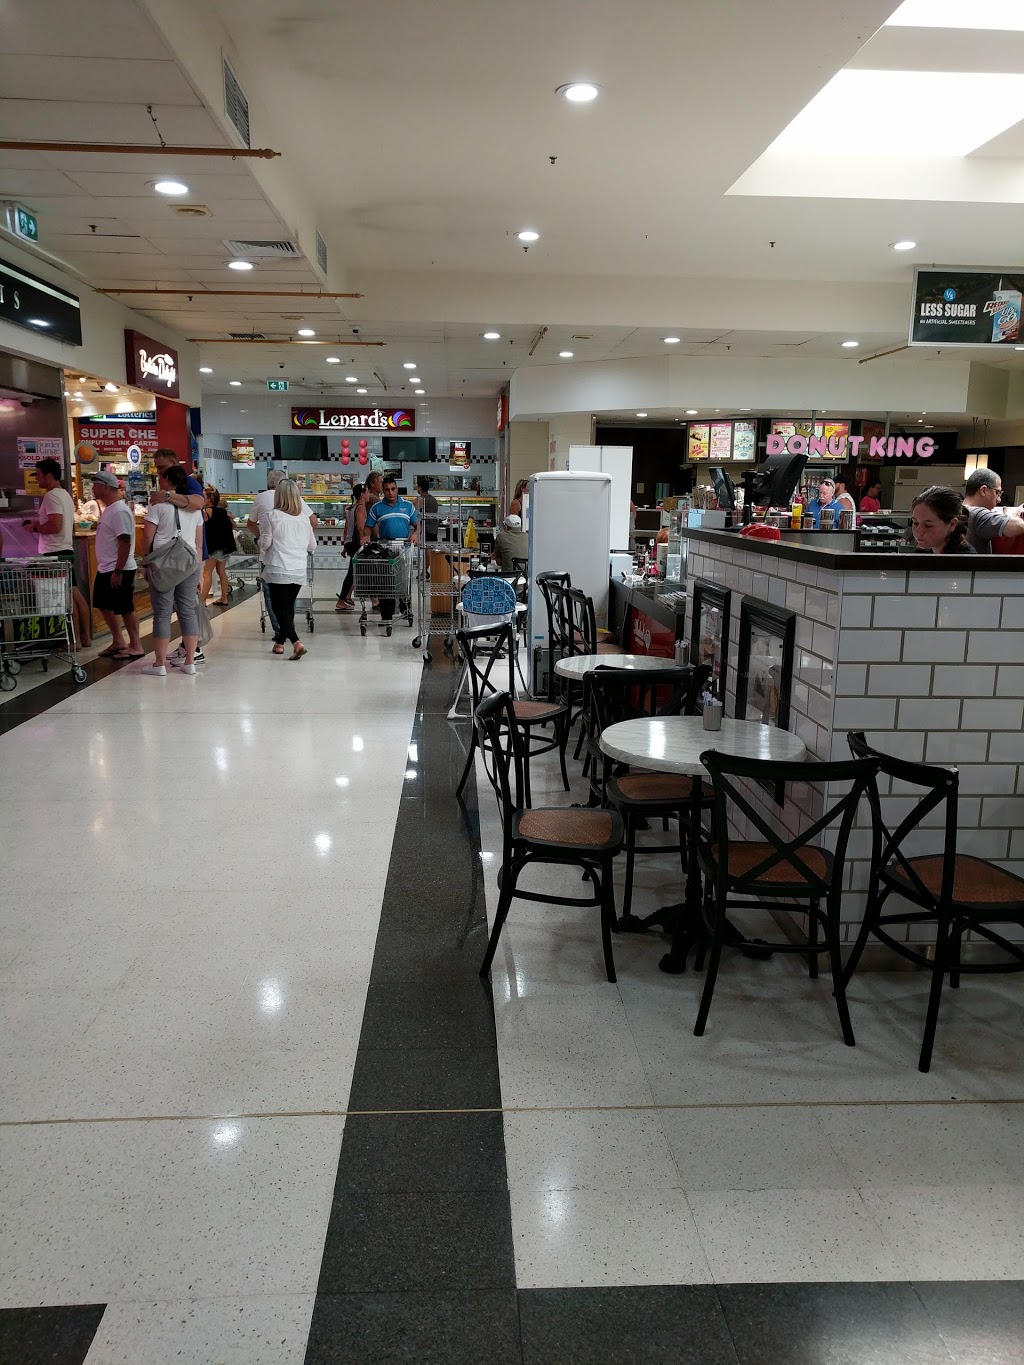 Caringbah Shopping Village | shopping mall | 58 President Ave, Caringbah NSW 2229, Australia | 0295427311 OR +61 2 9542 7311